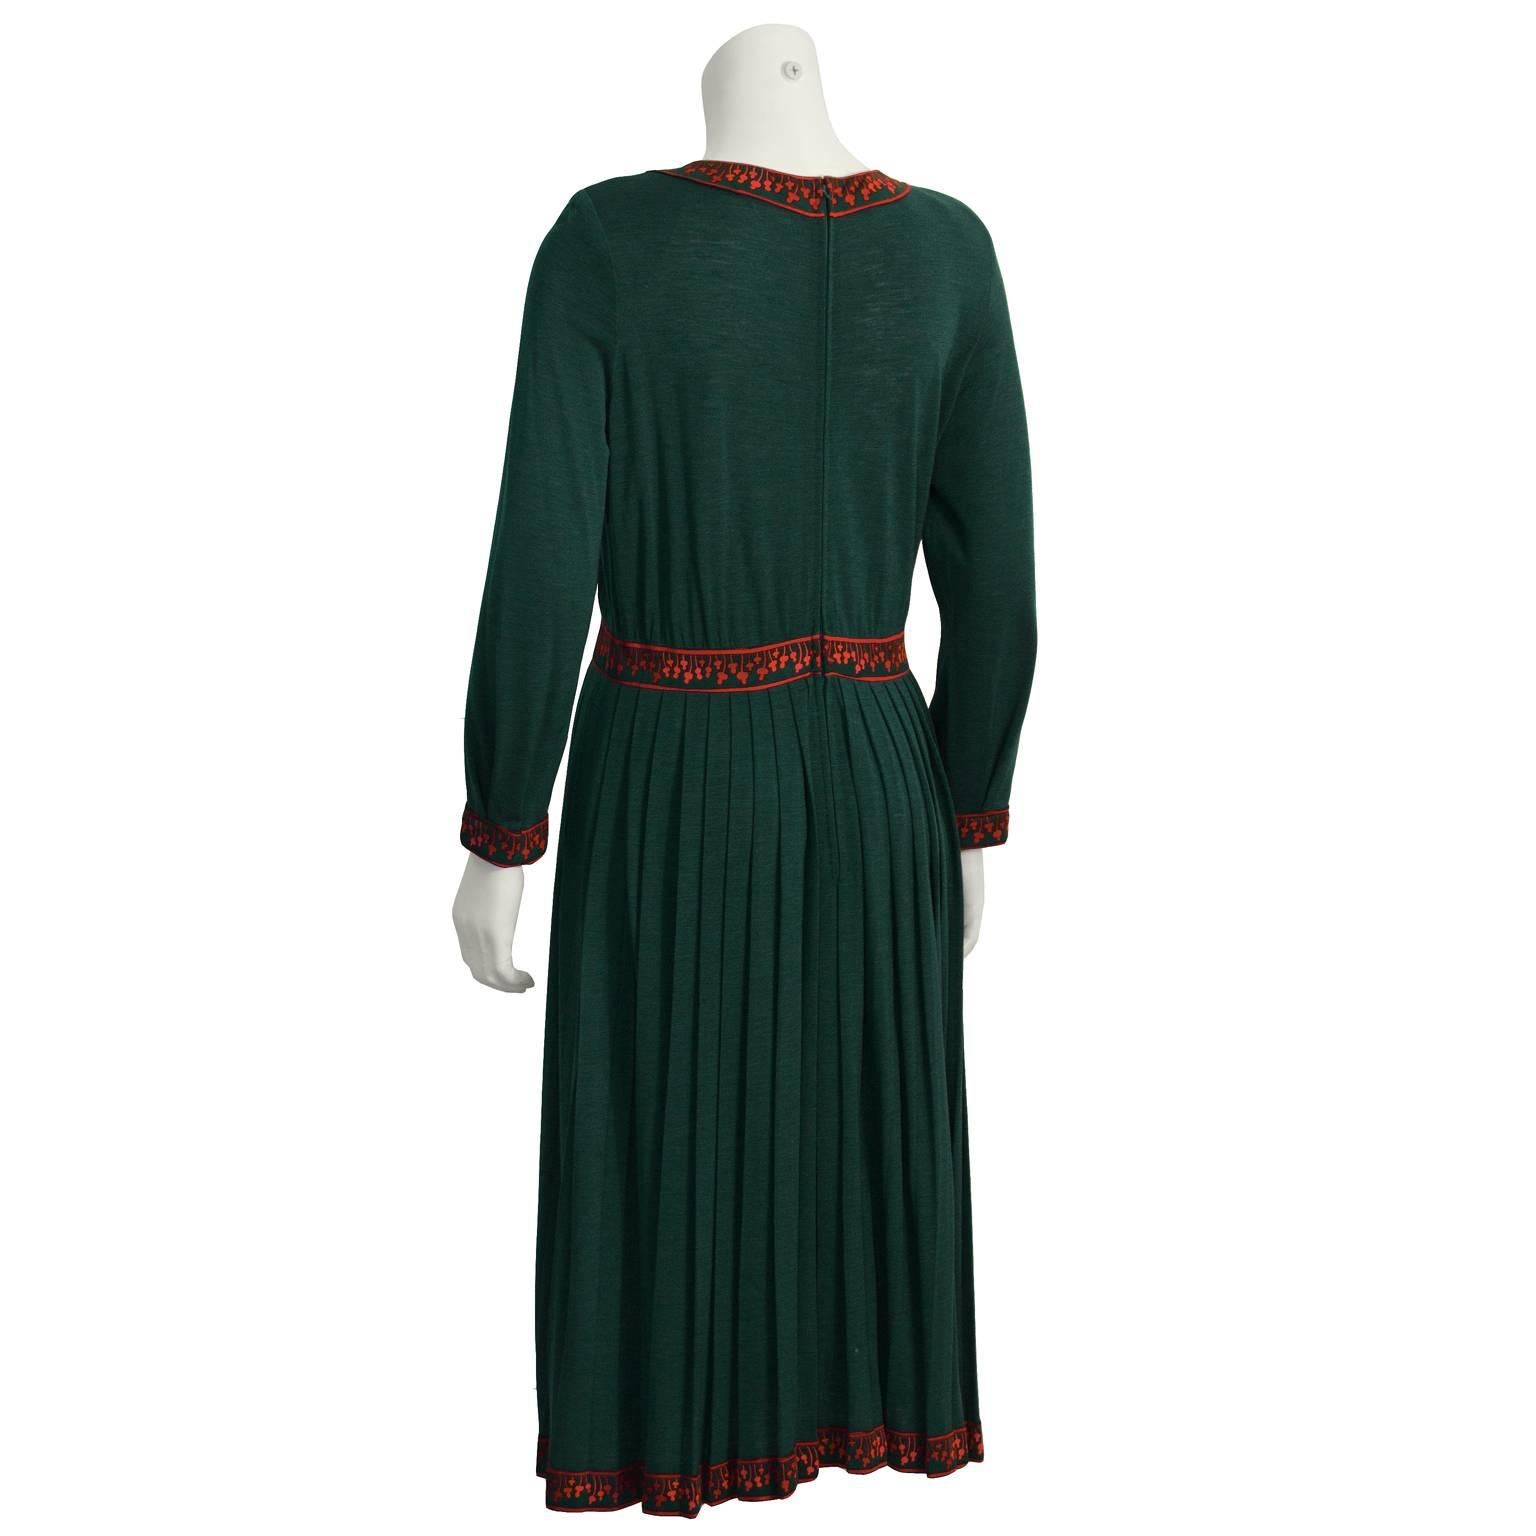 Black 1970's Bessi Green Dress with Fushia Trim